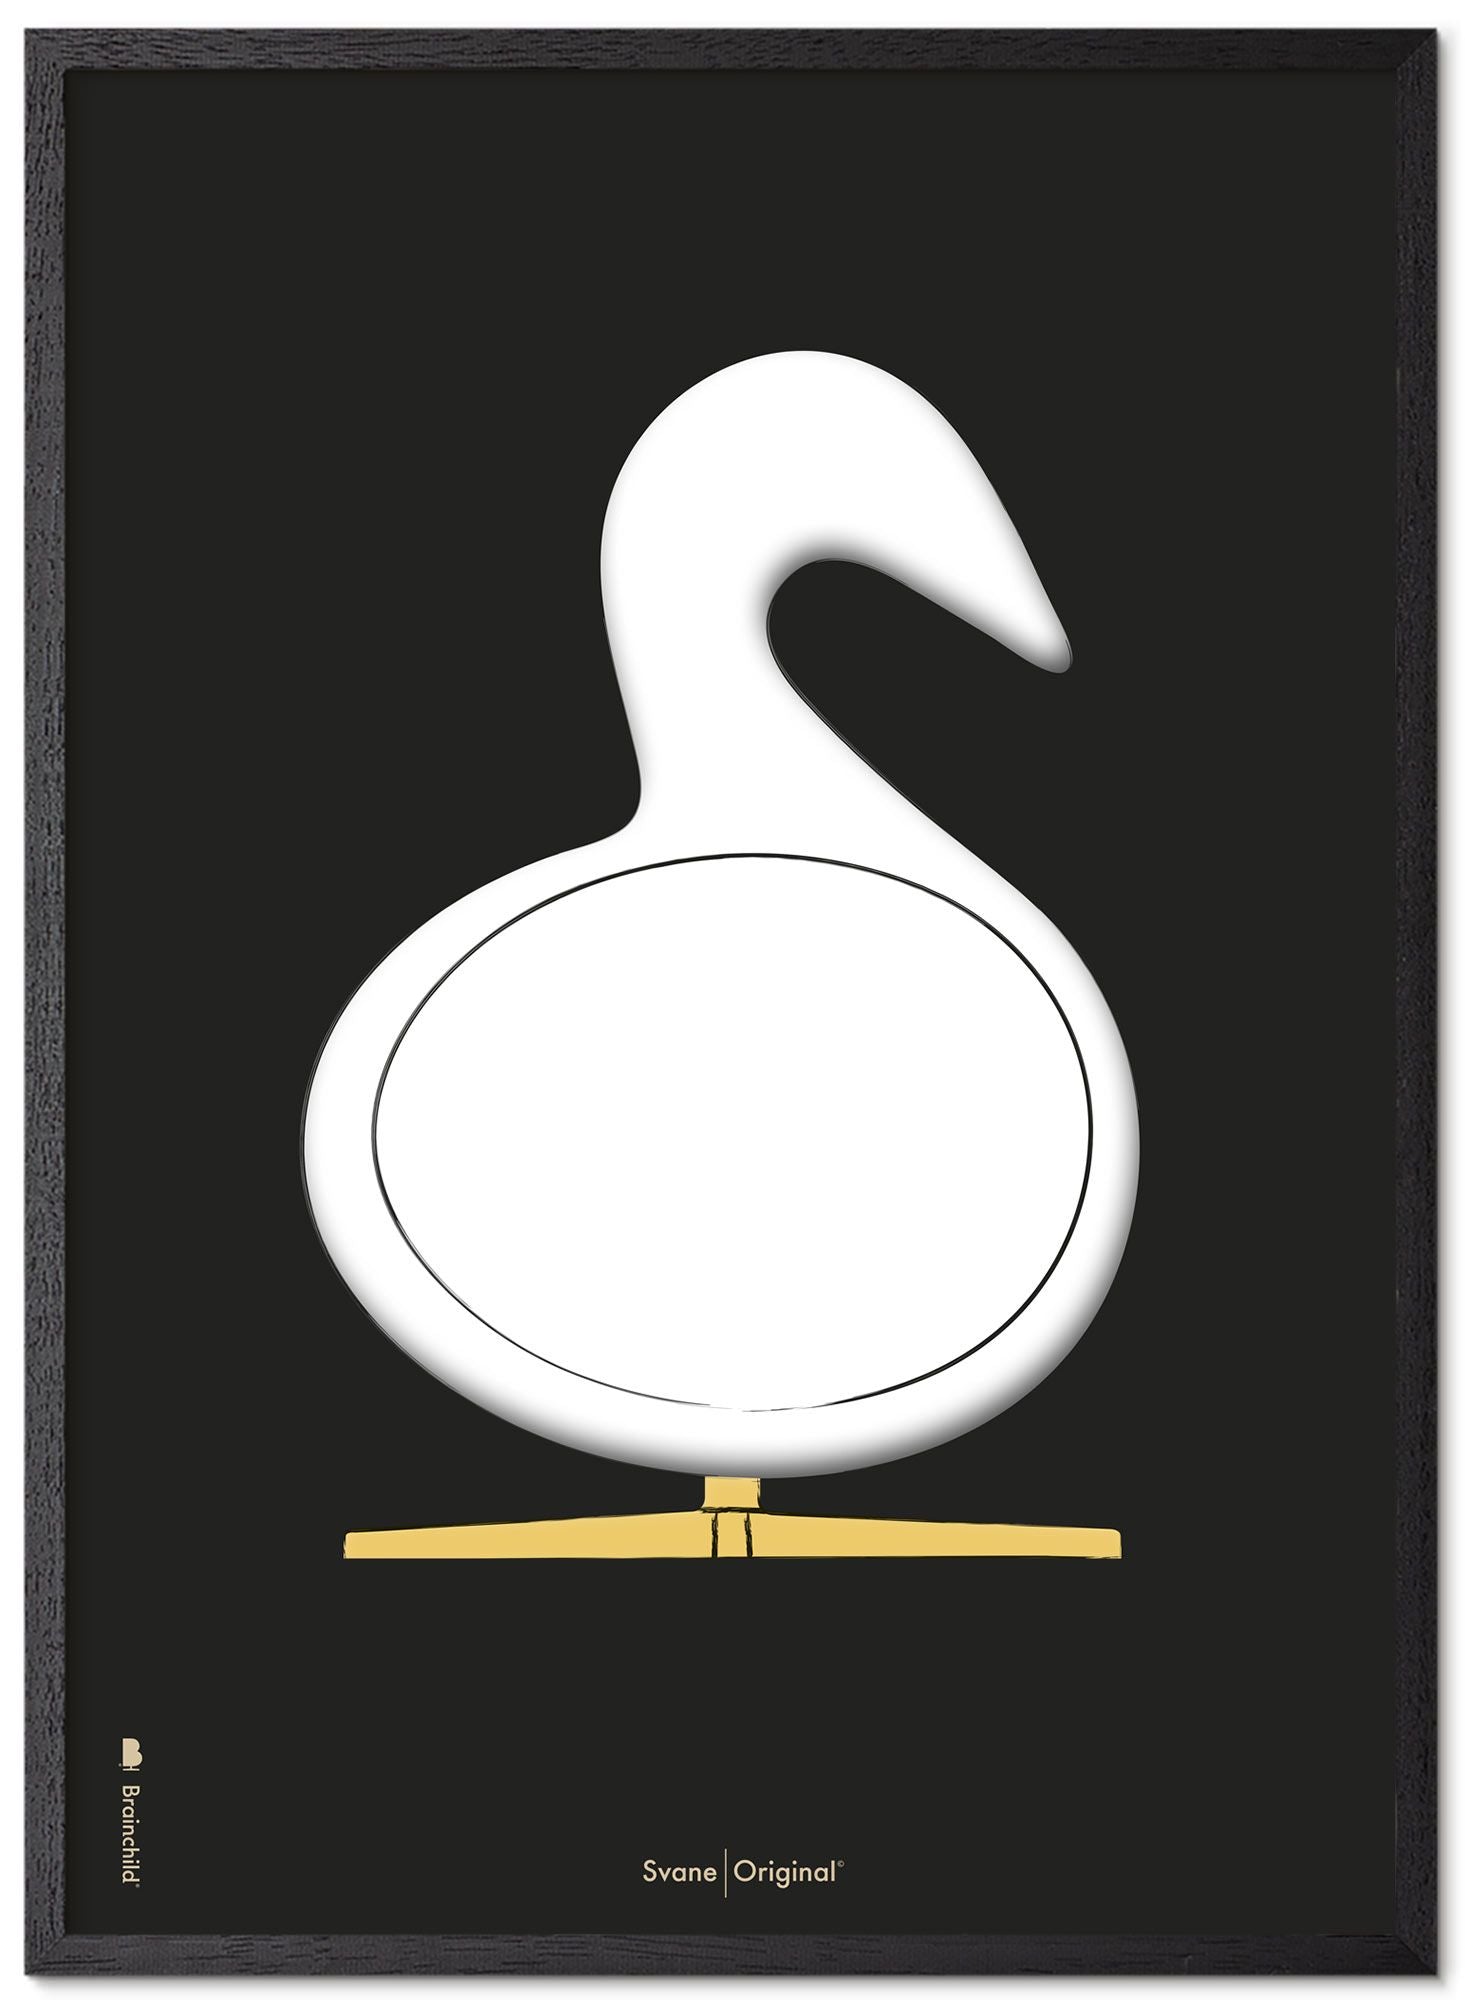 Brainchild Swan Design Sketch Poster Frame Made Of Black Lacquered Wood 50x70 Cm, Black Background